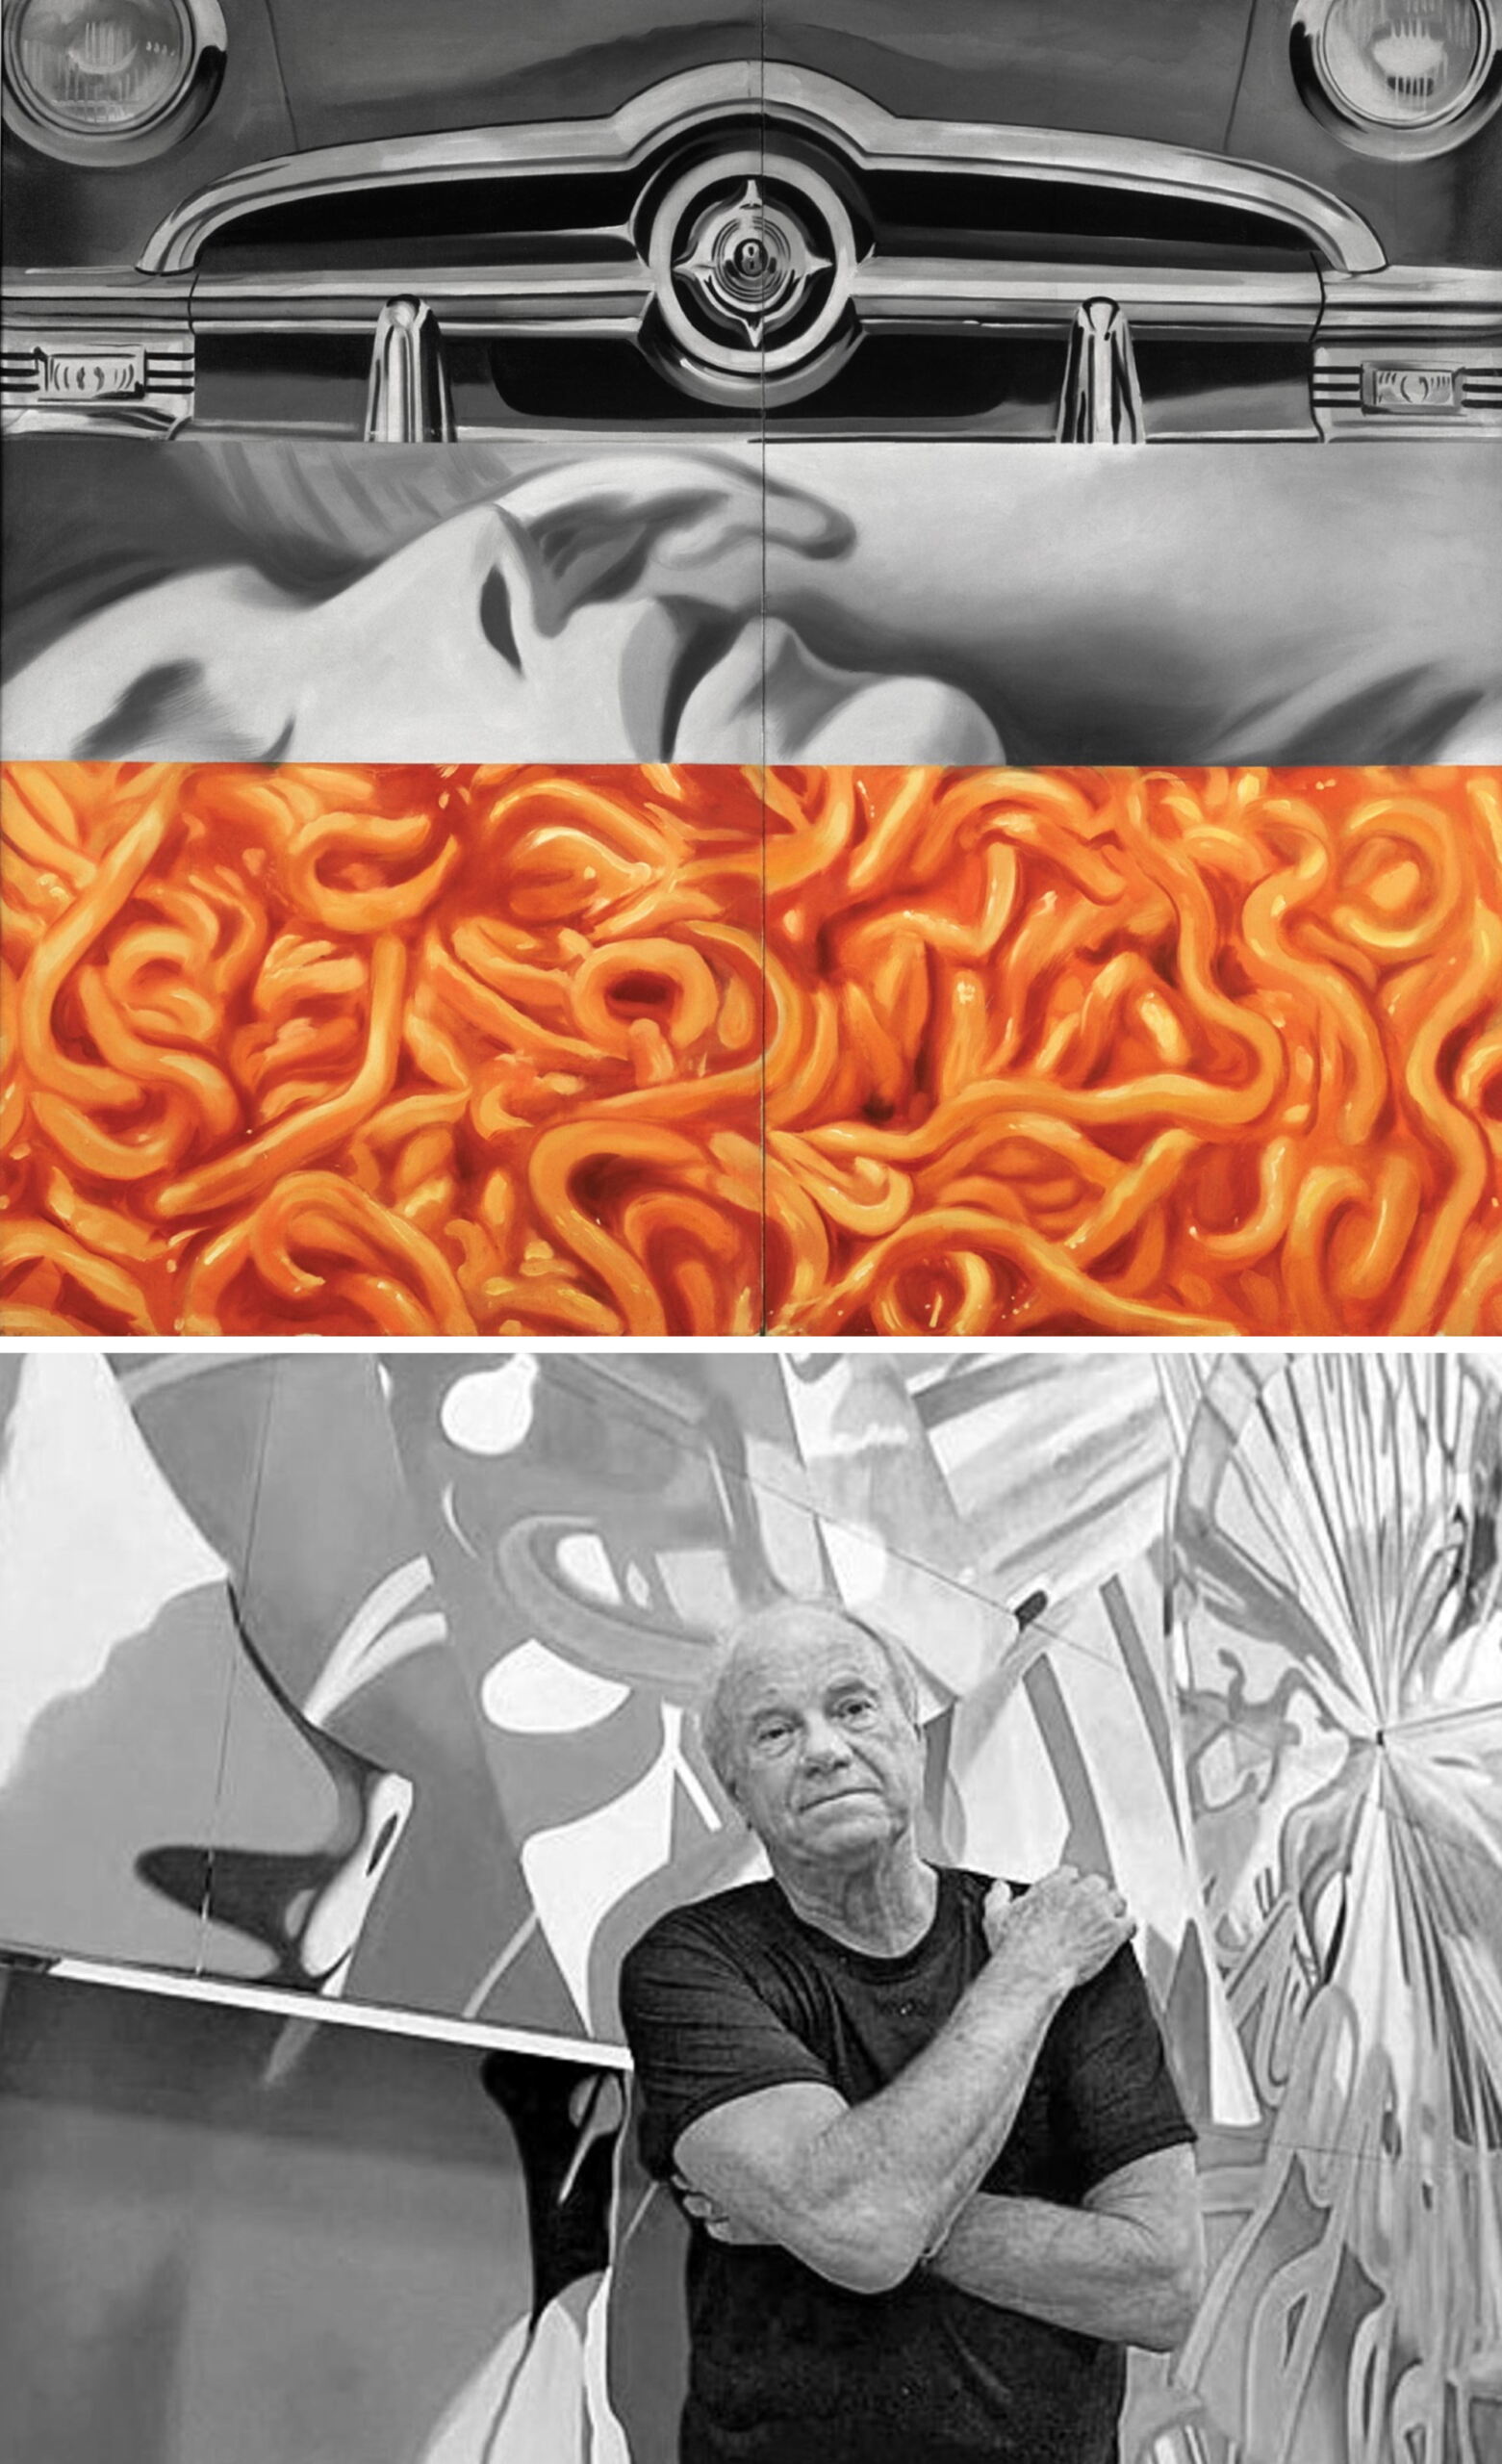 spaghetti pop art